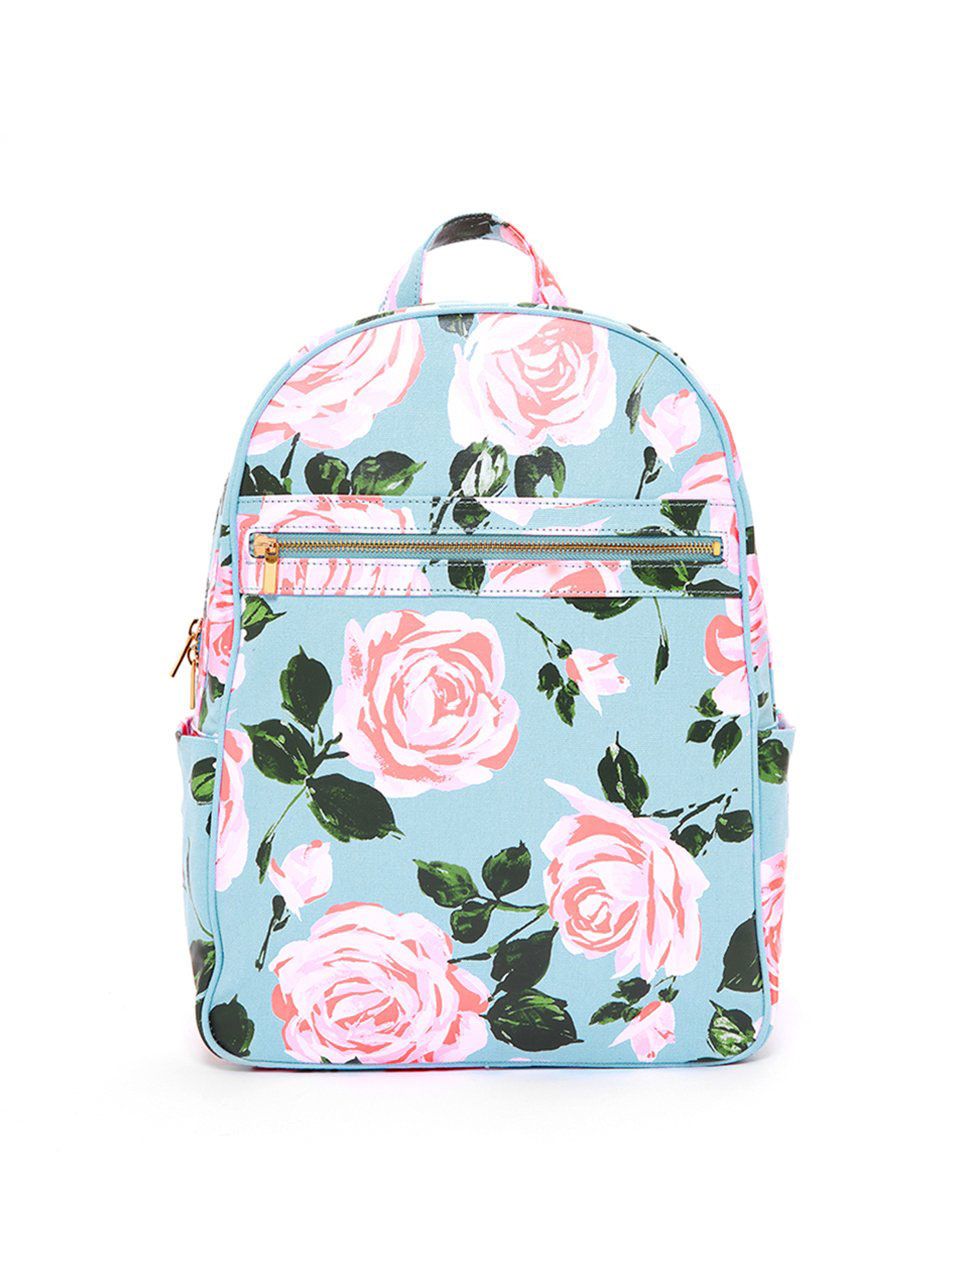 Bag, Product, Green, Pink, Backpack, Handbag, Shoulder bag, Diaper bag, Fashion accessory, Luggage and bags, 